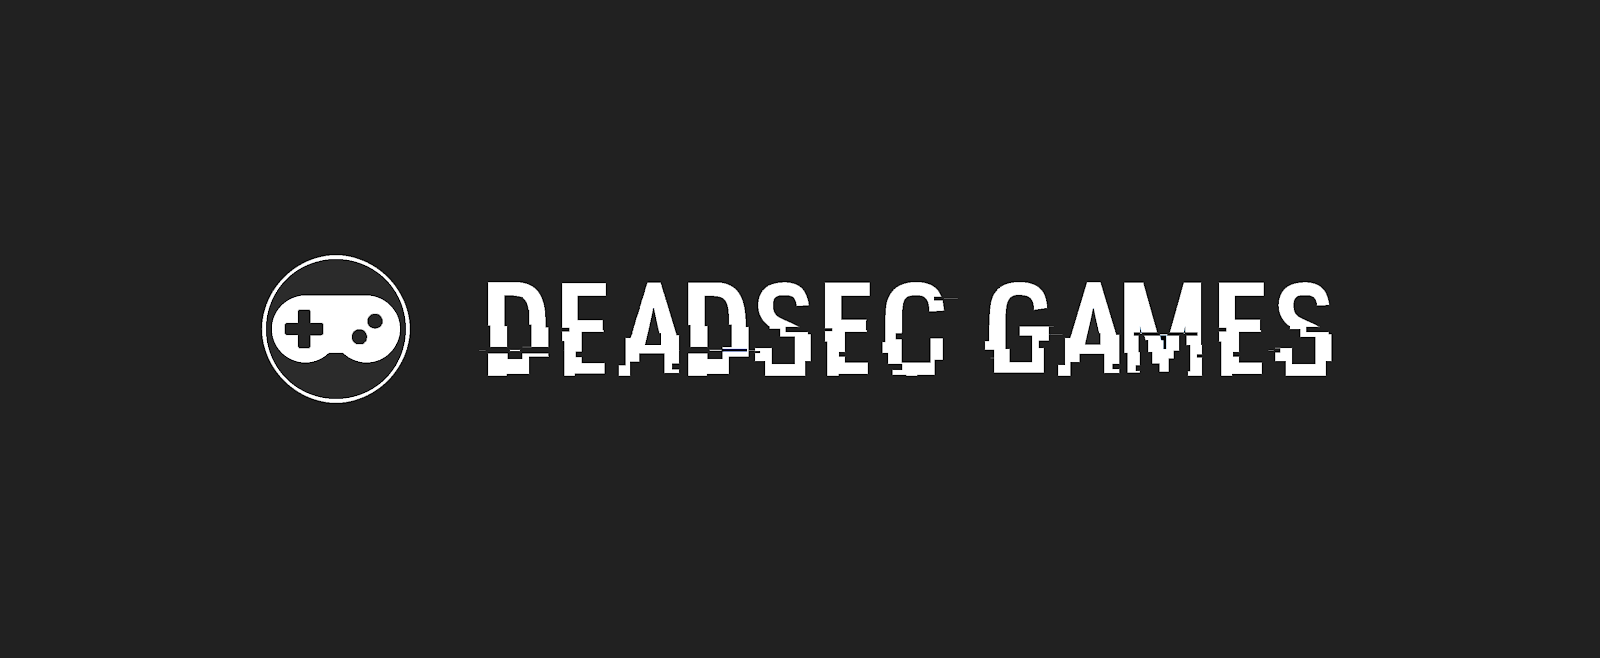 DEADSEC GAMES